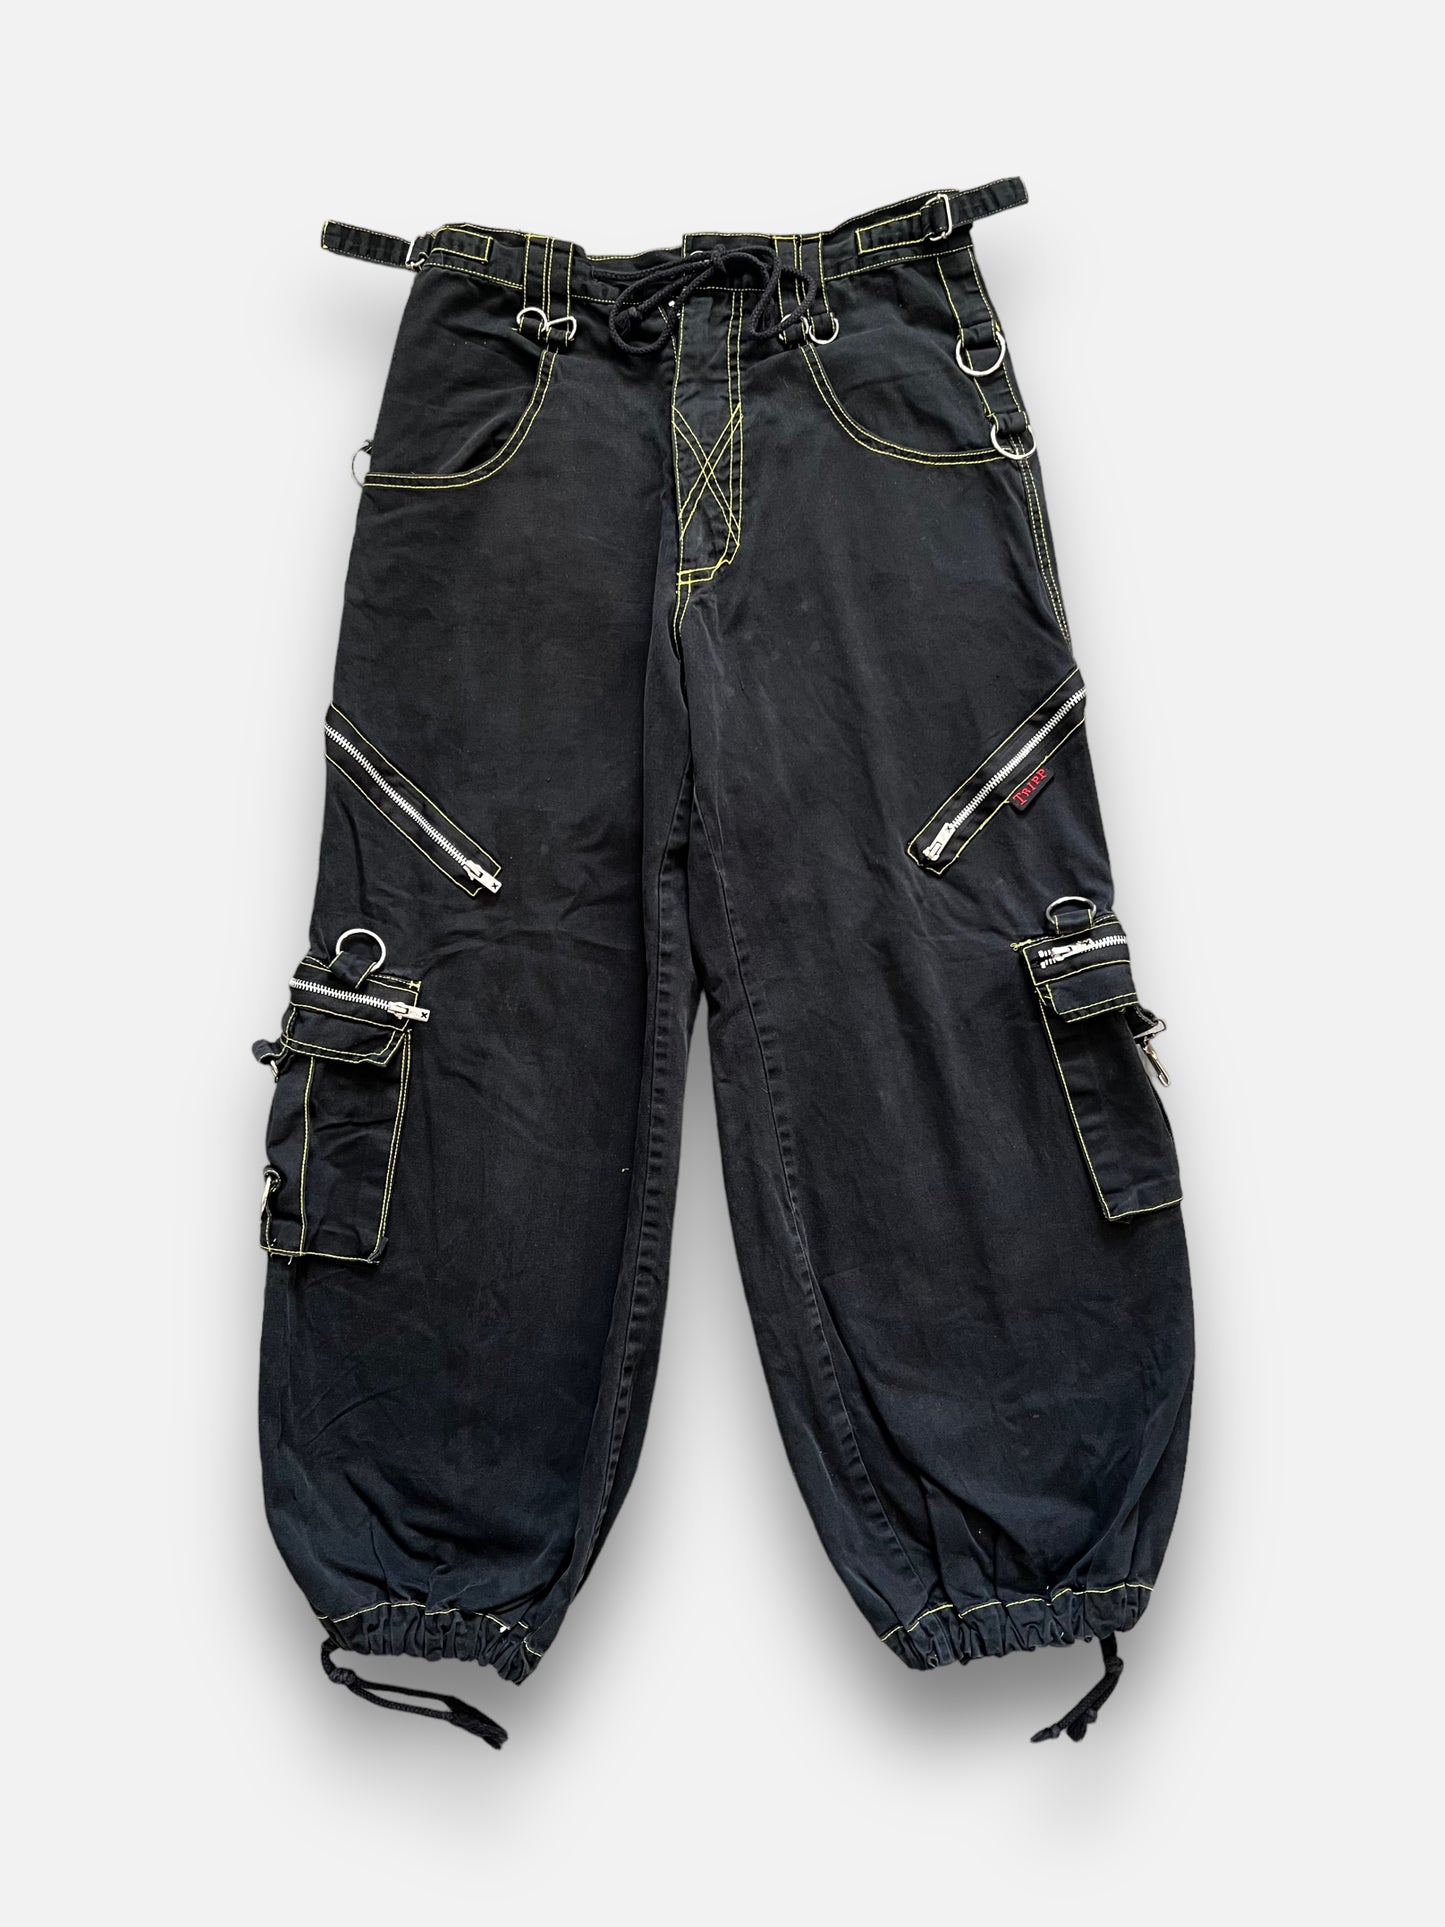 90s Tripp NYC Pants (30x29)